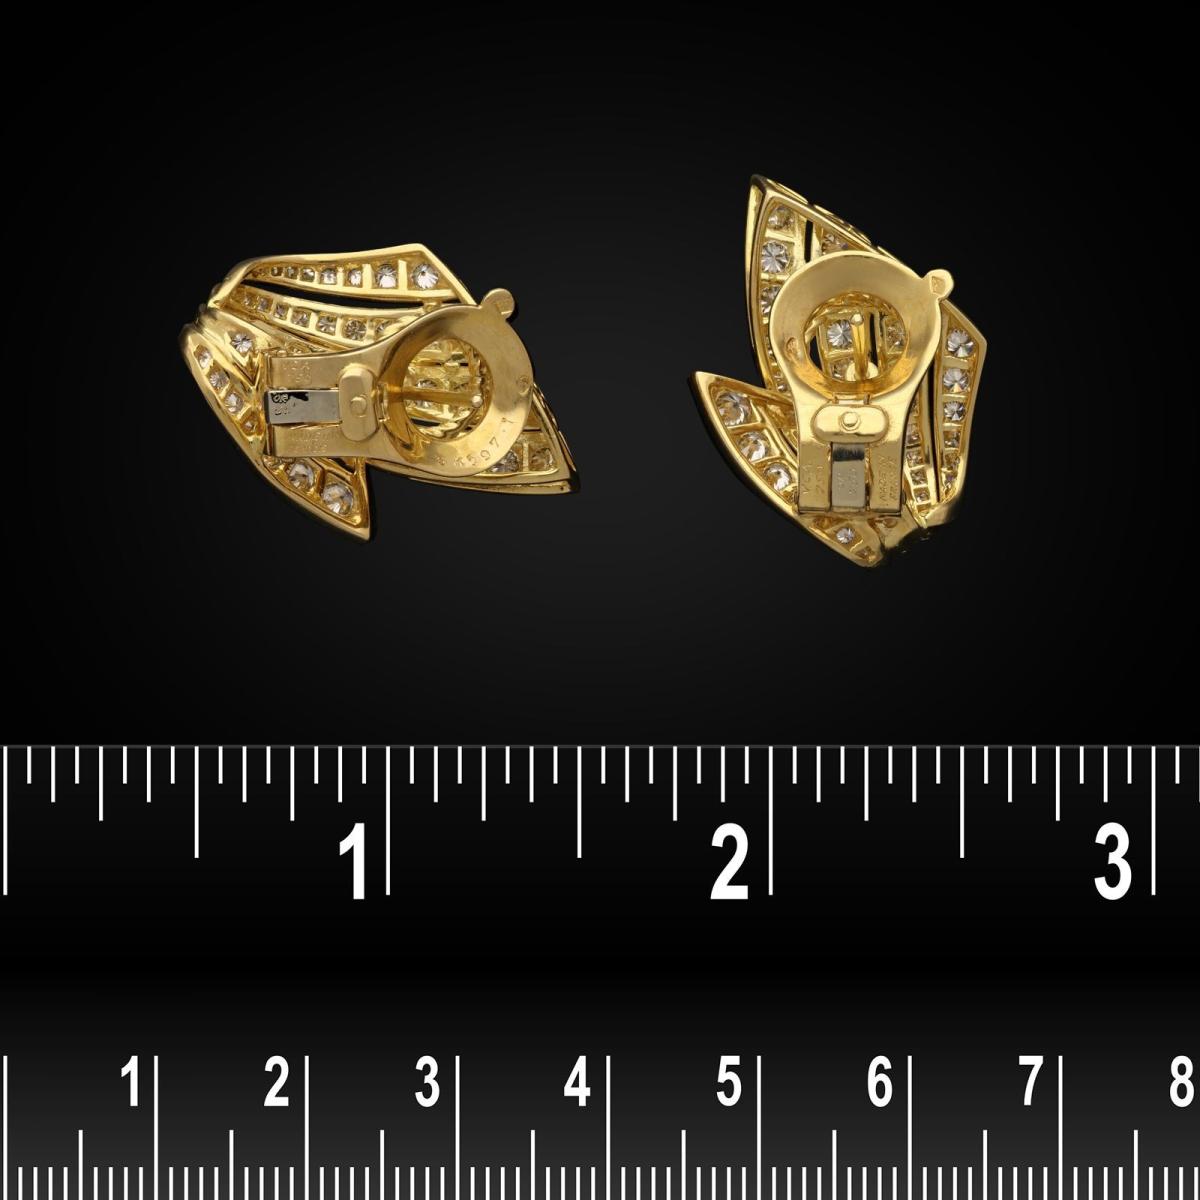 Van Cleef & Arpels Pair of 18ct Gold And Diamond Fan Earrings Circa 1990s